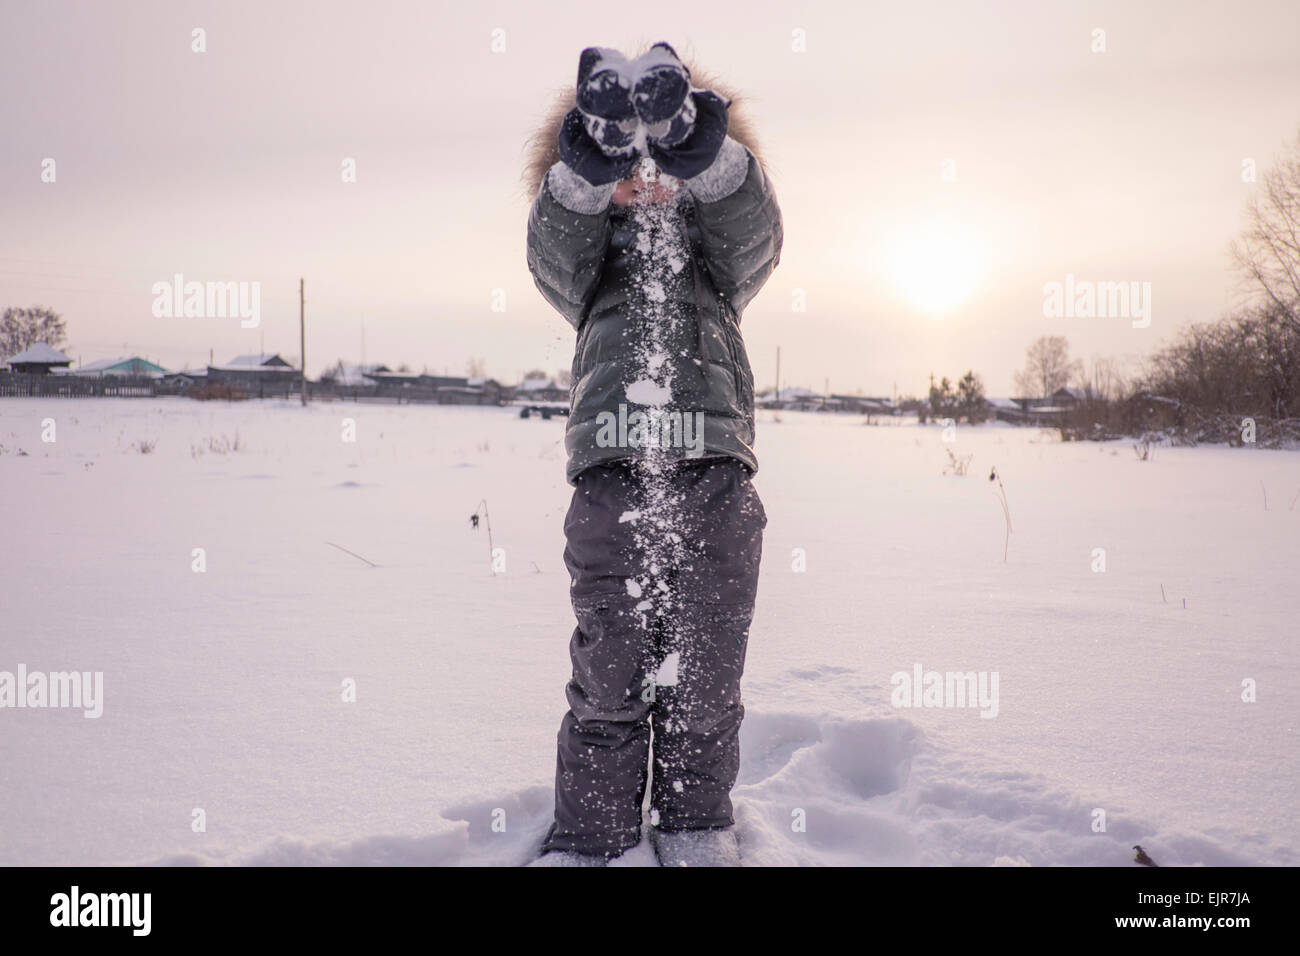 Mari boy in parka playing in snowy field Stock Photo